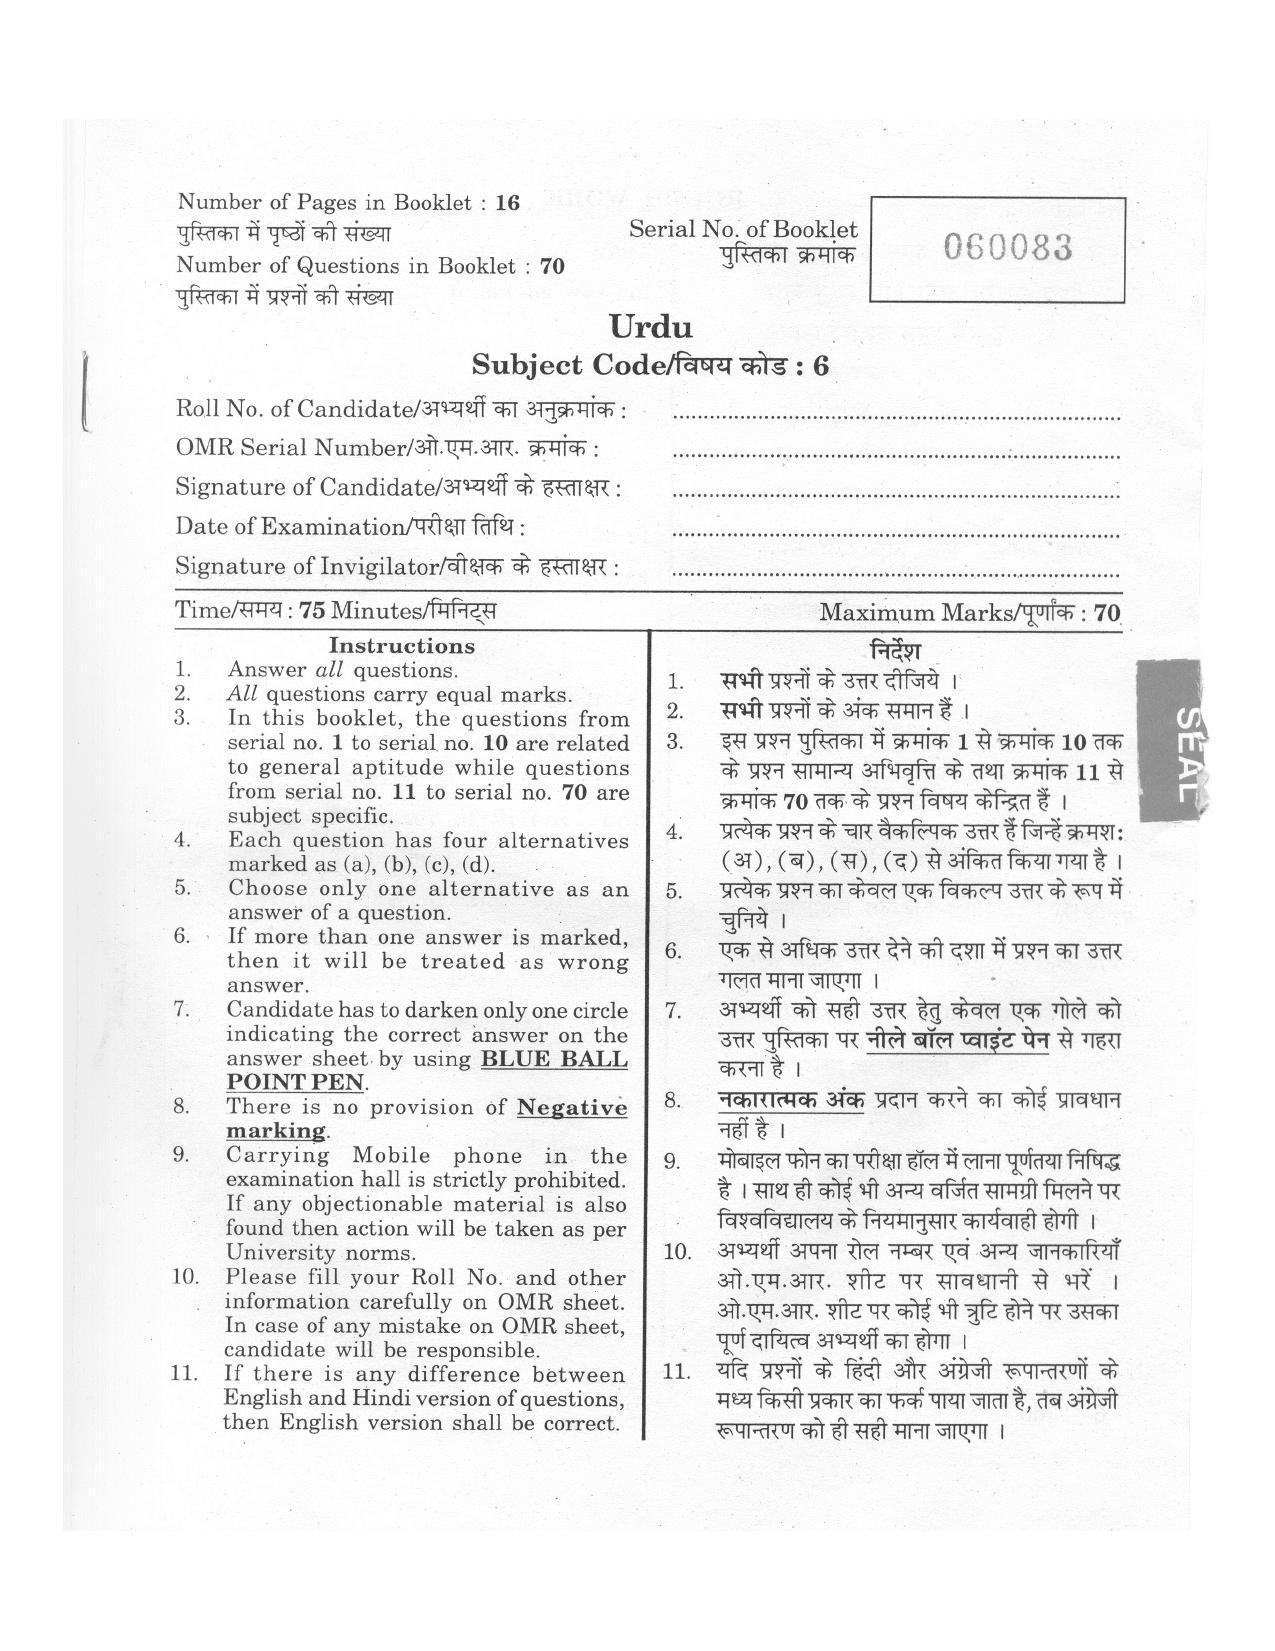 URATPG Urdu 2013 Question Paper - Page 1